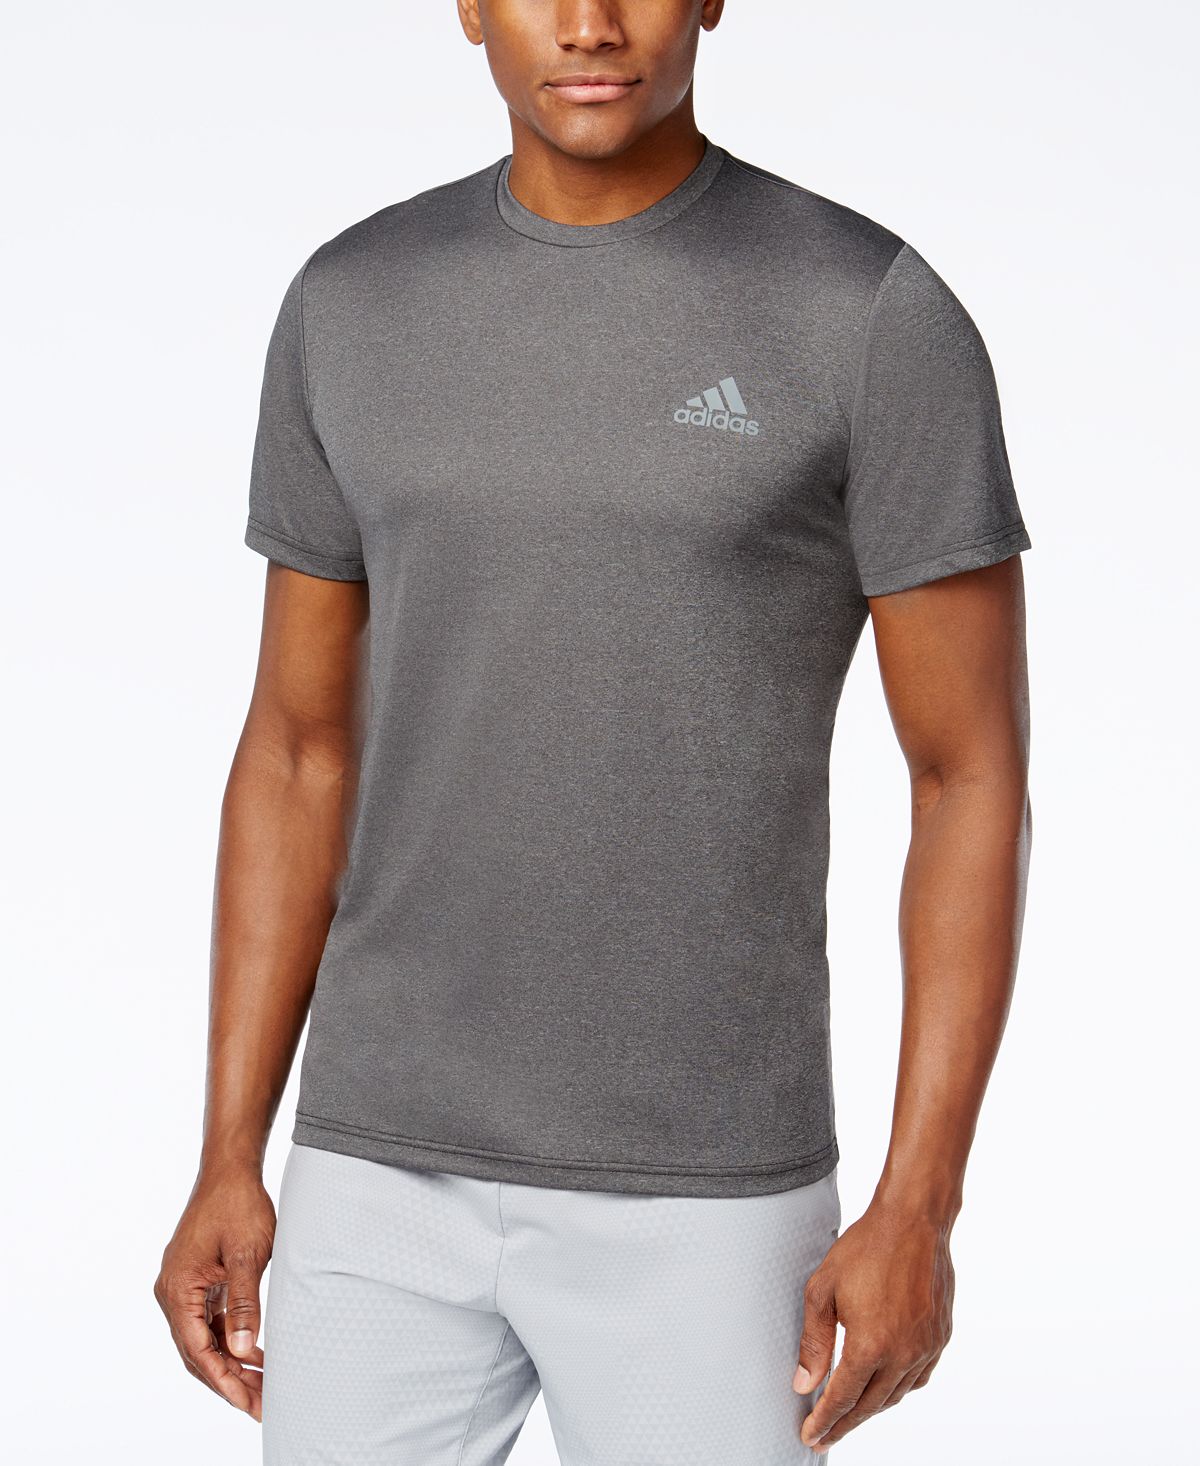 Adidas Essential Tech T-shirt Charcoal Grey